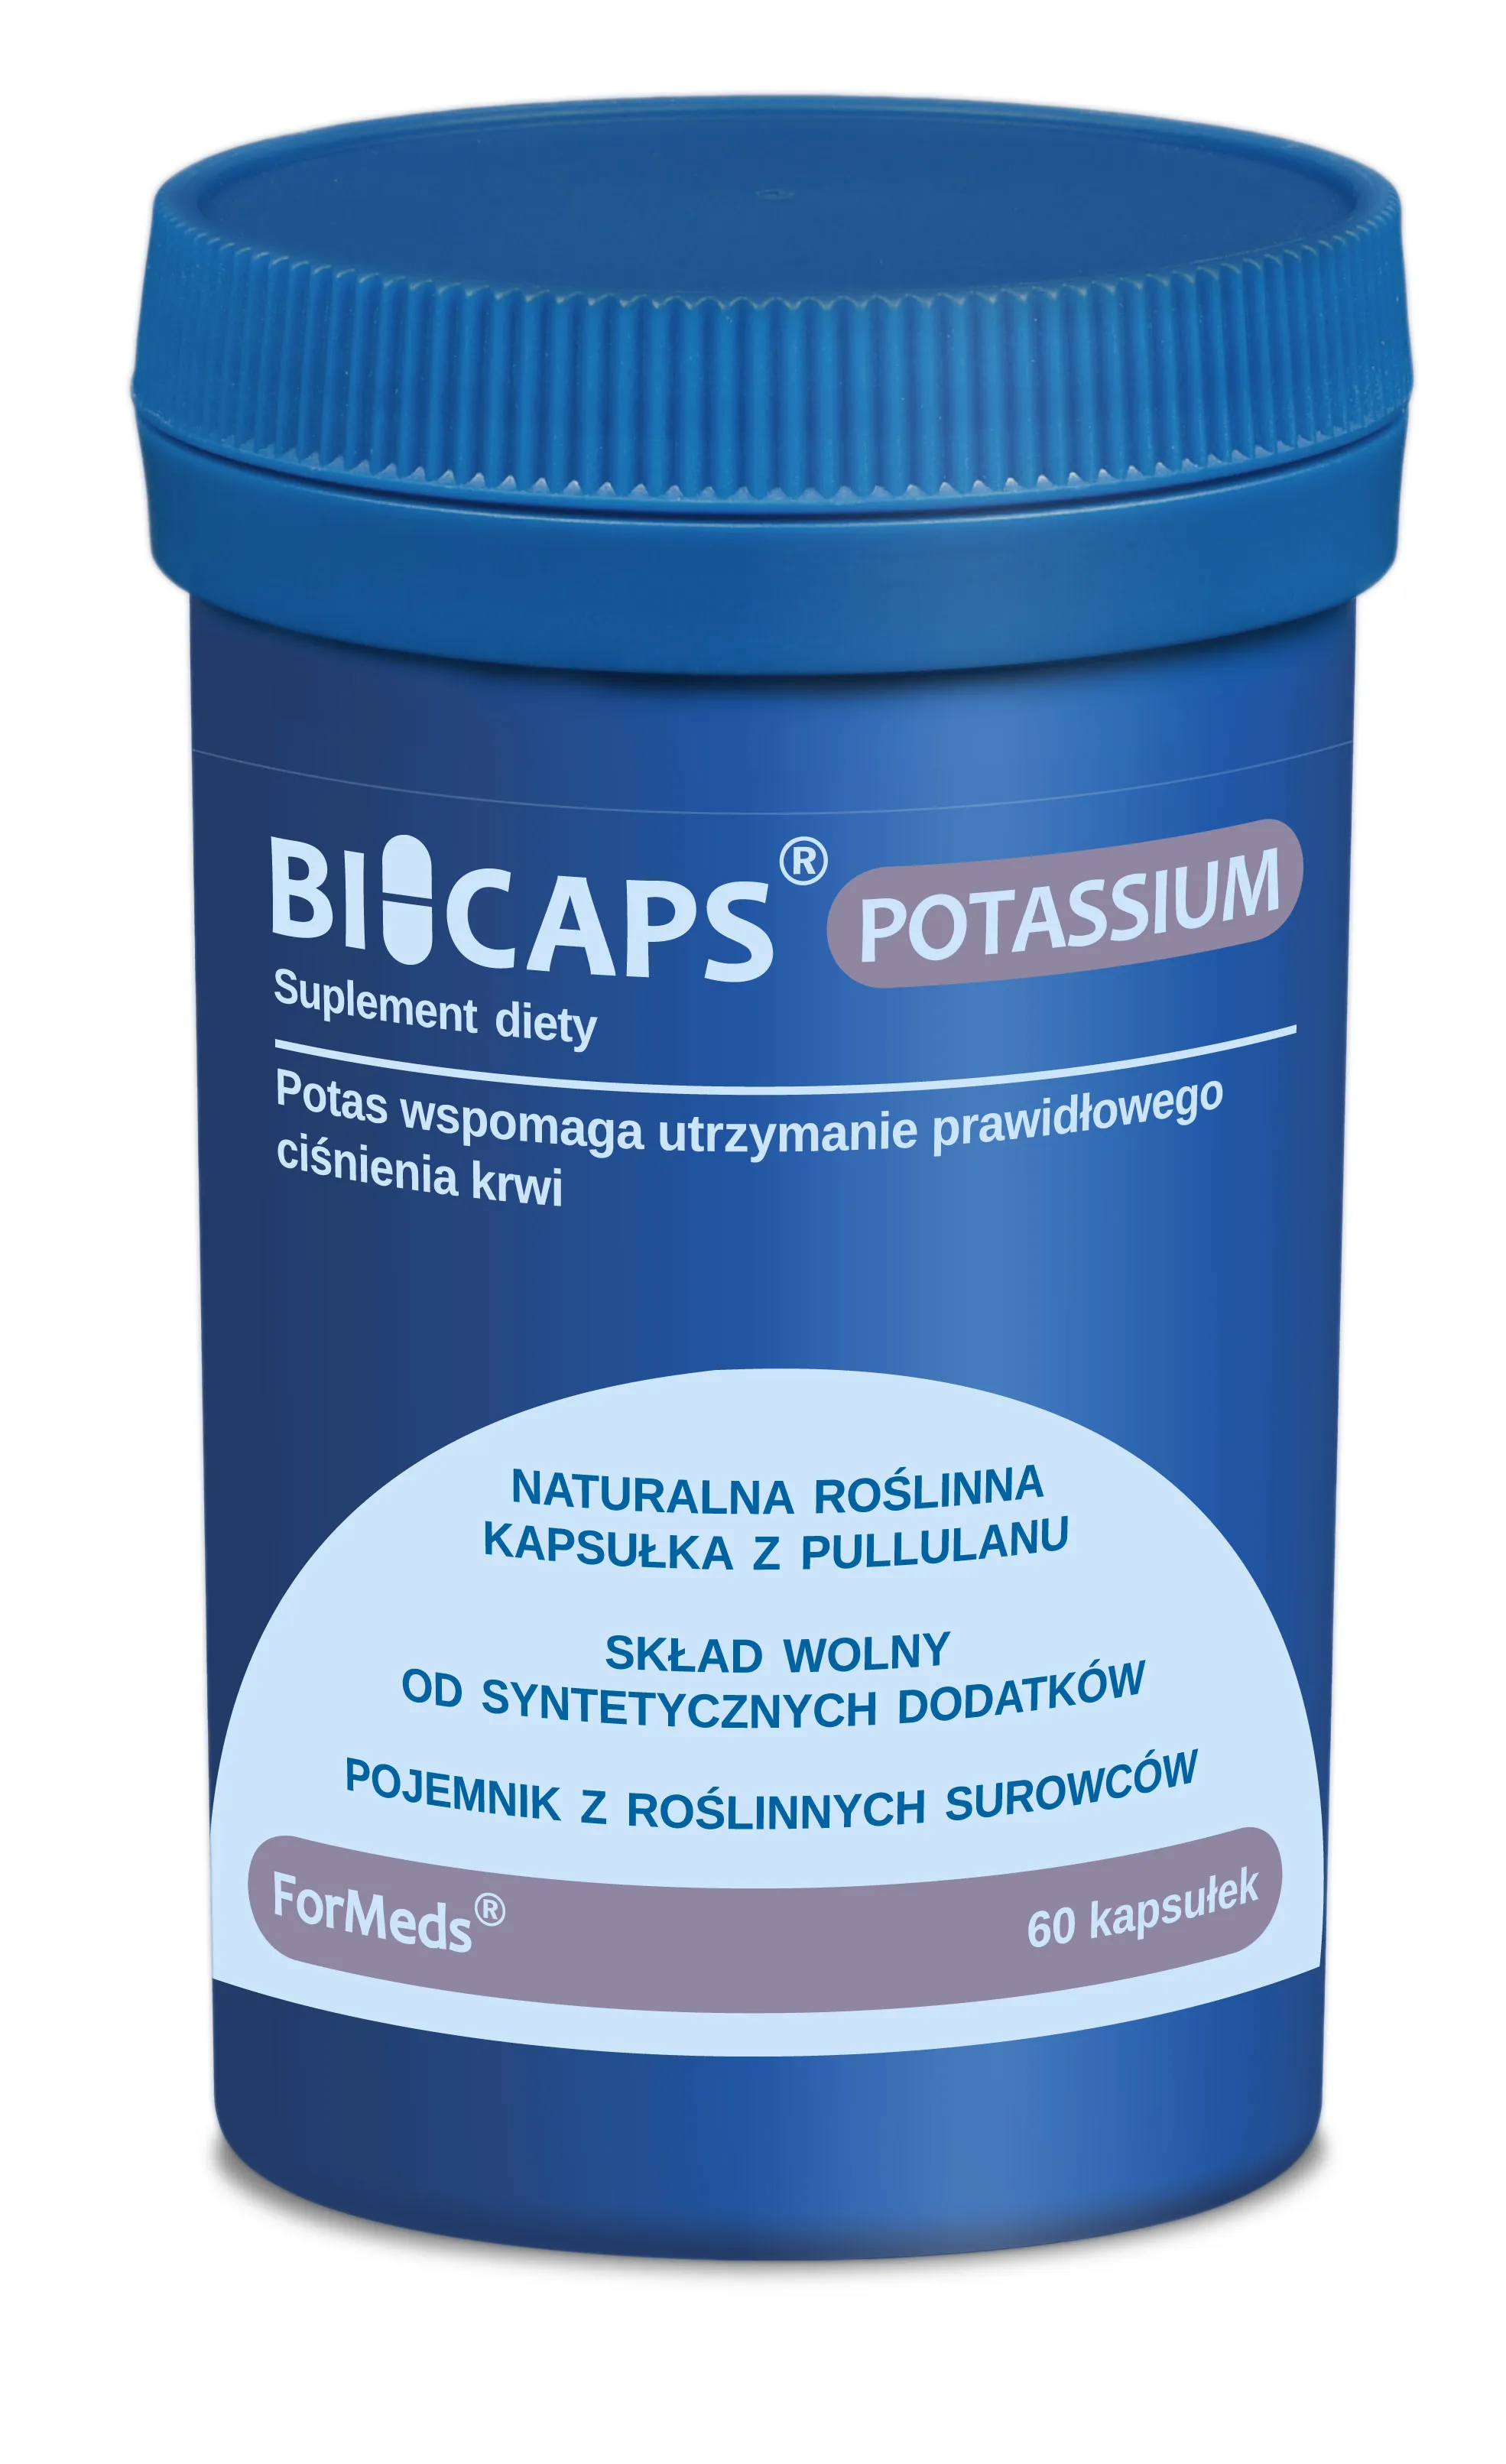 ForMeds Bicaps Potassium, suplement diety,  60 kapsułek